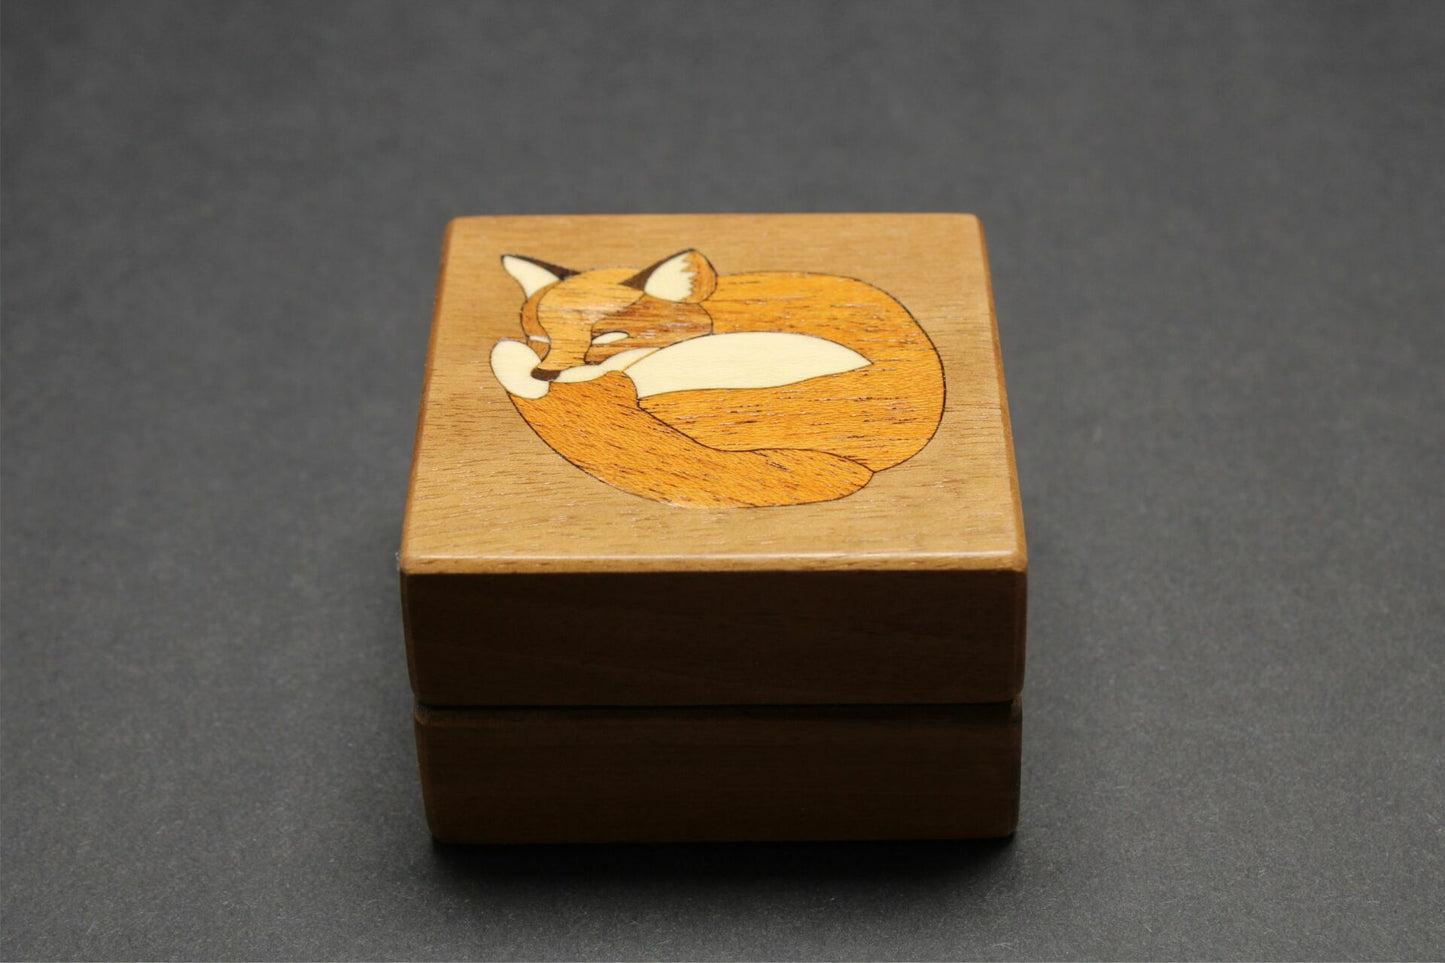 Mahogany Ring Box - "Sleeping Fox"  RB-23  .  Made in the U.S.